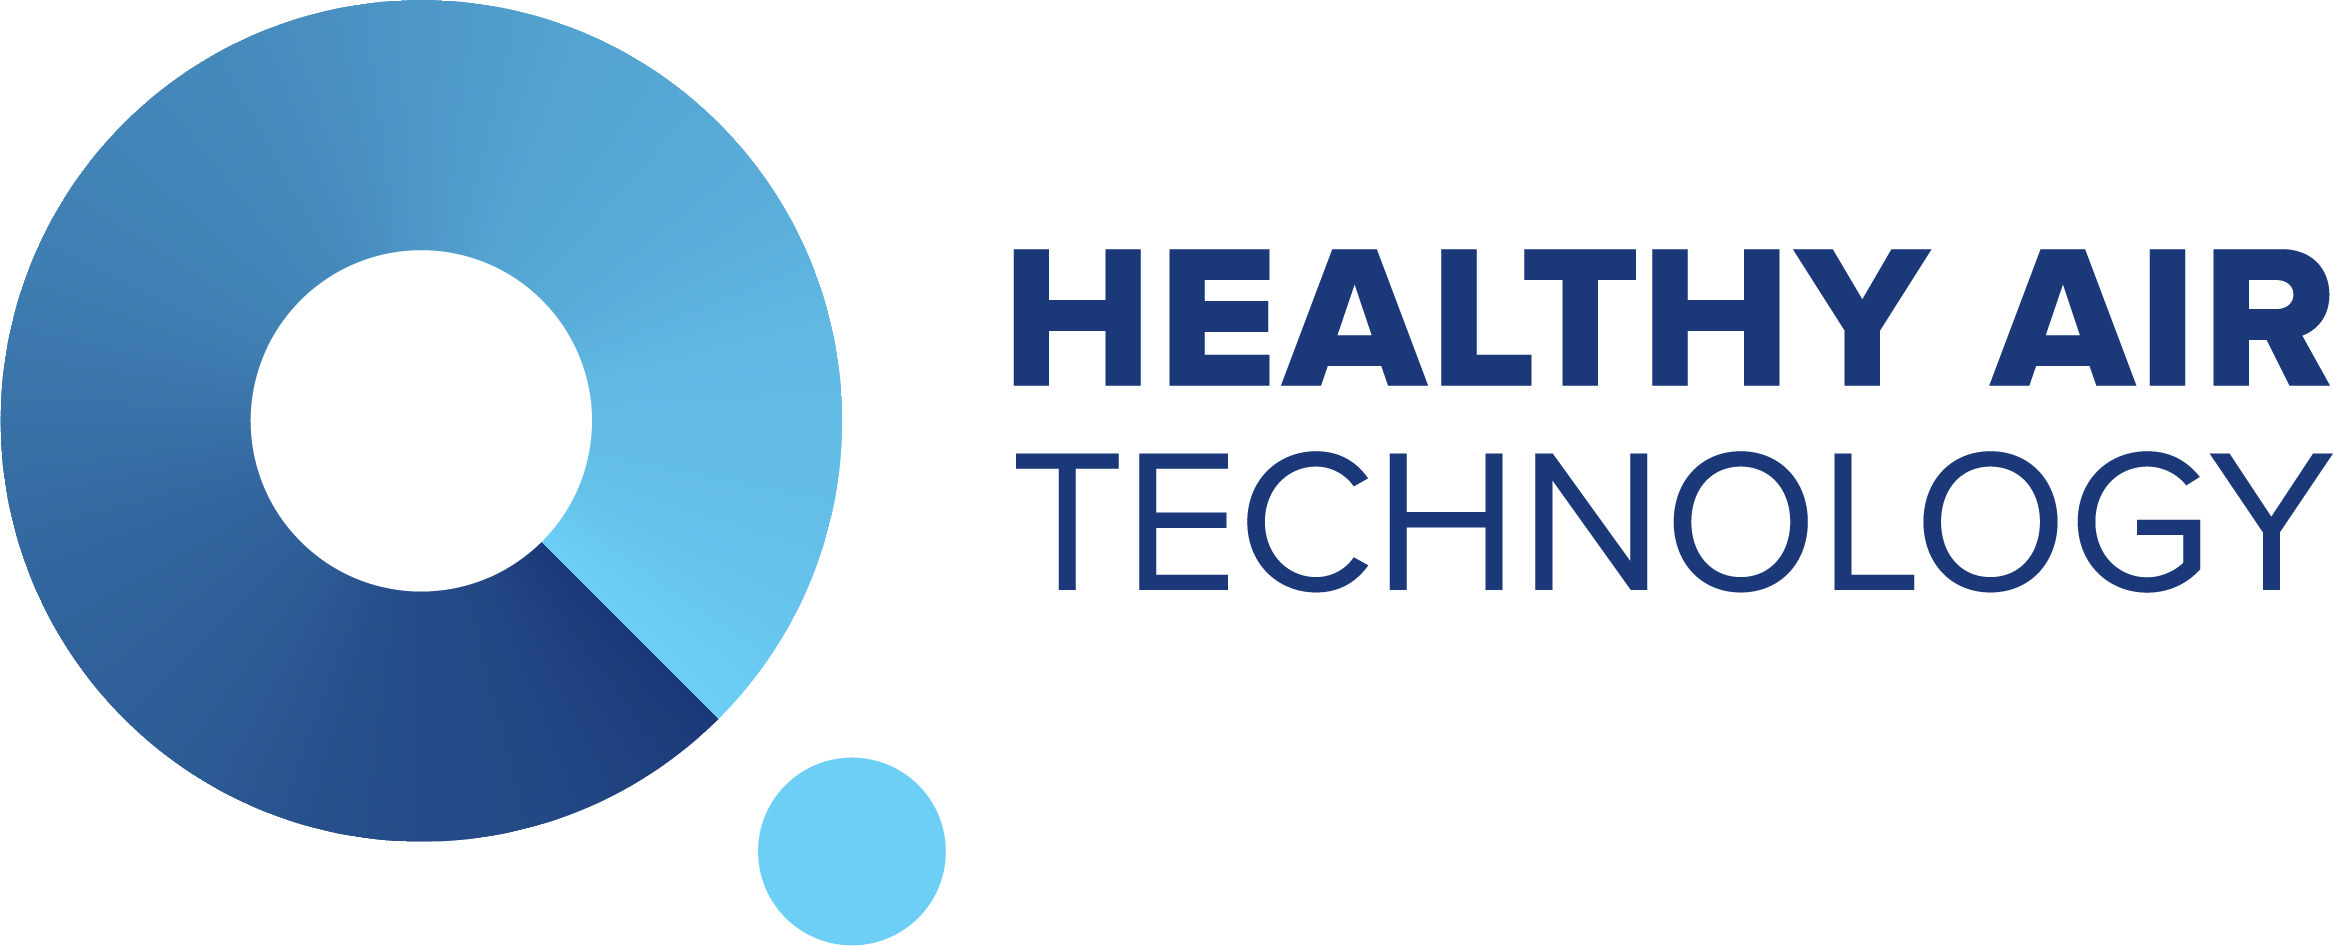 Healthy Air Technology logo